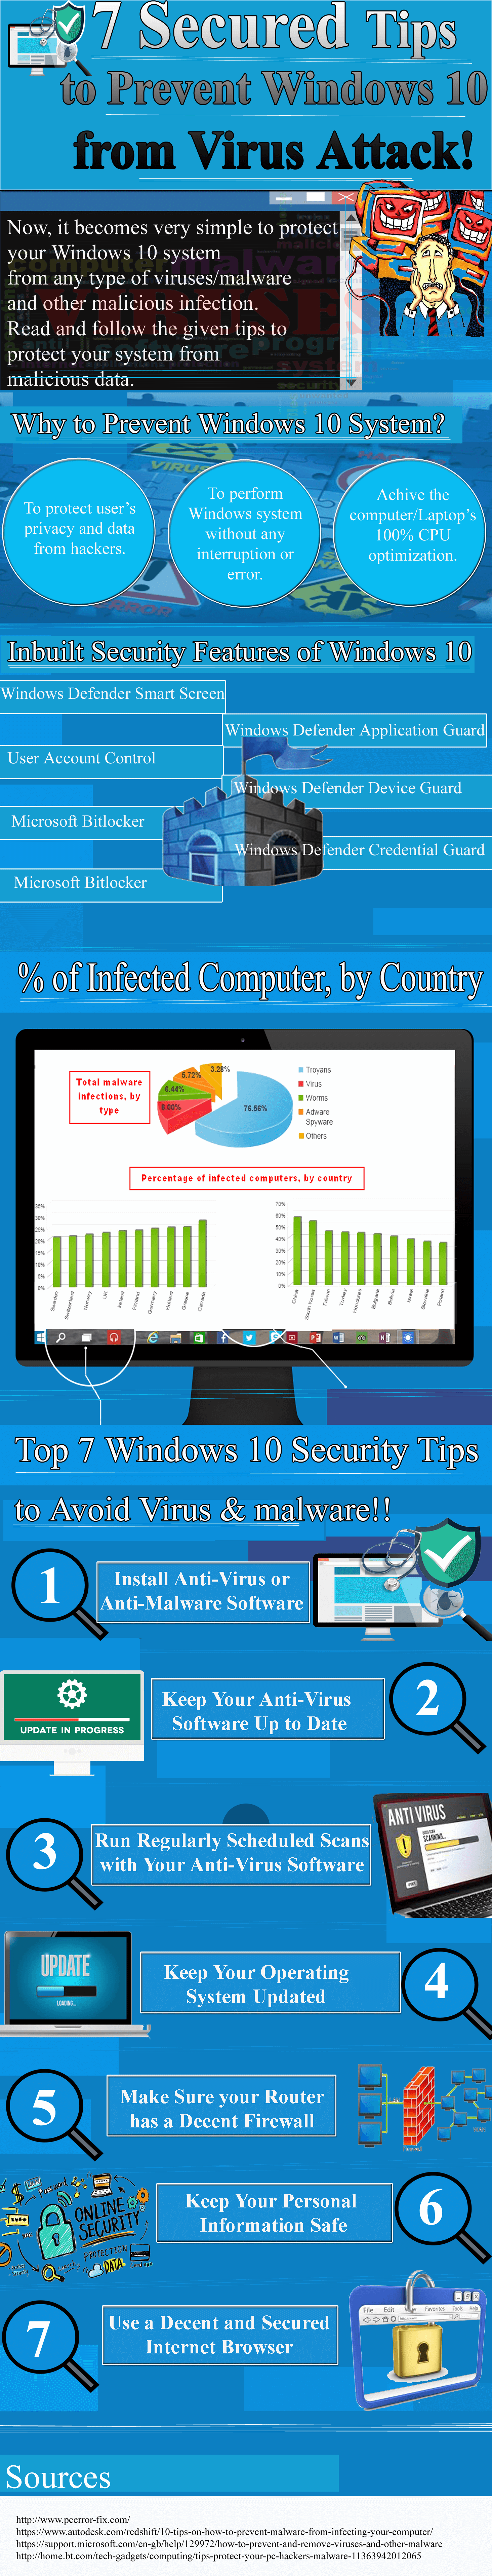 Windows 10 security tips